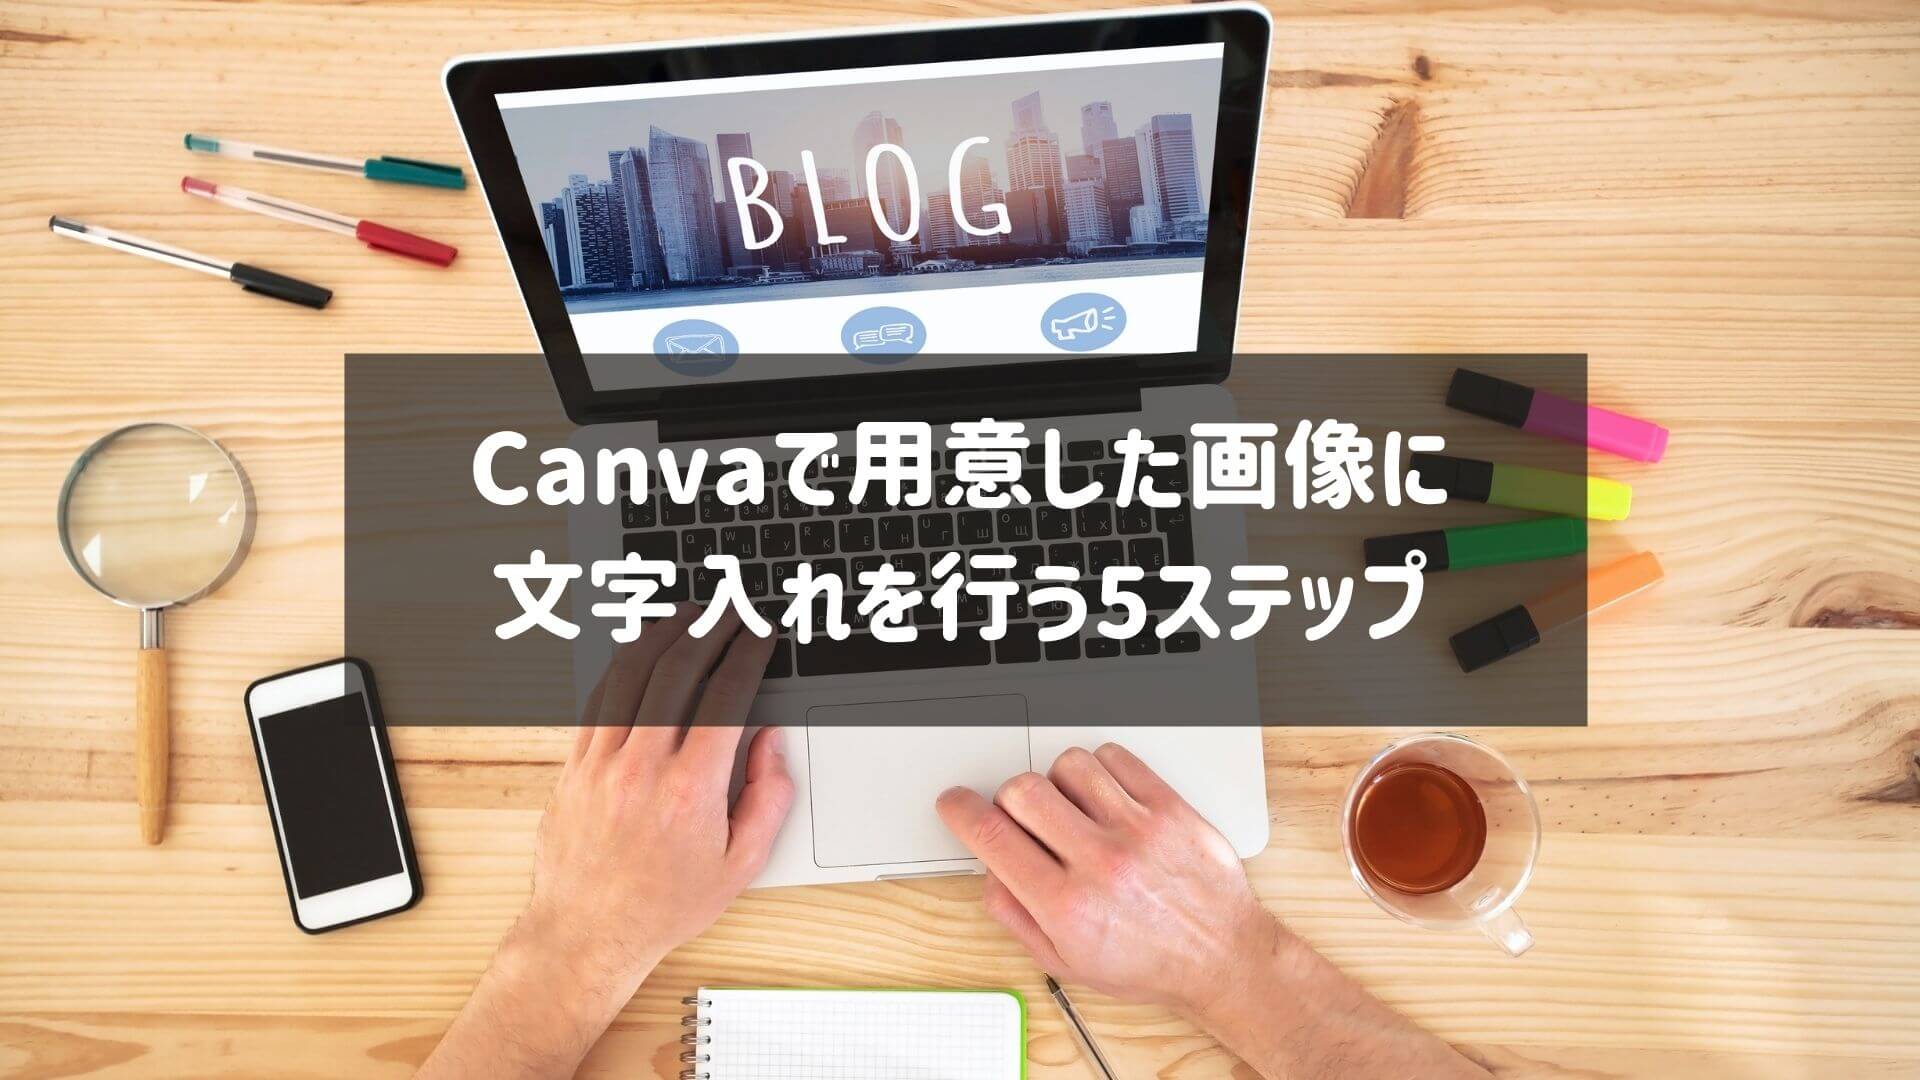 Canvaで用意した画像に文字入れを行う方法を5ステップで解説